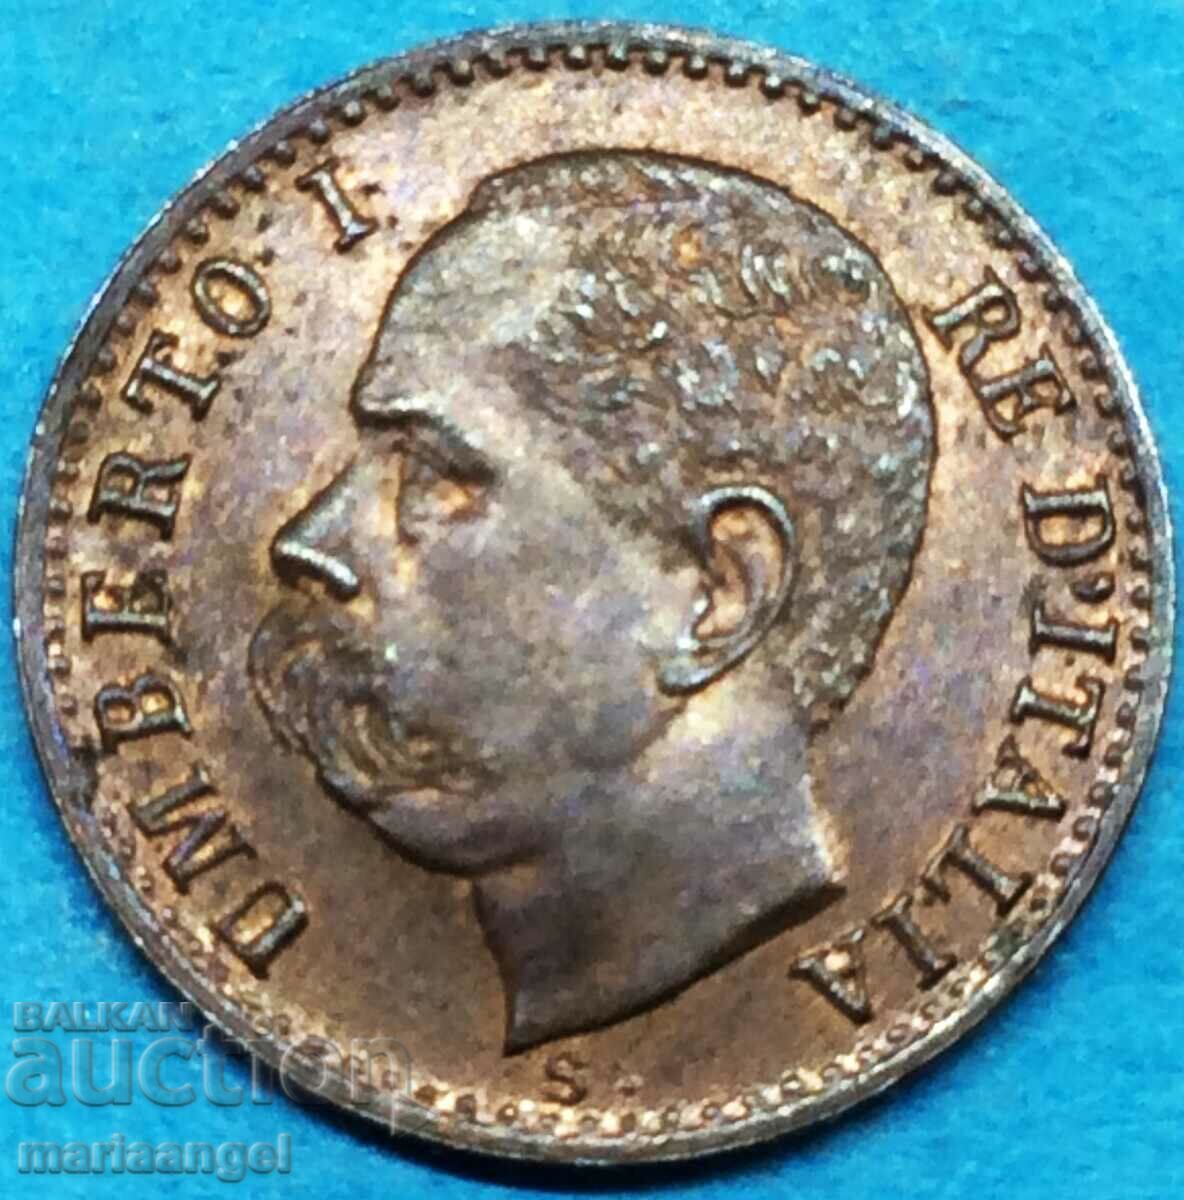 1 centesimo 1895 Italy Umberto 1 (1895-1904) rare and expensive